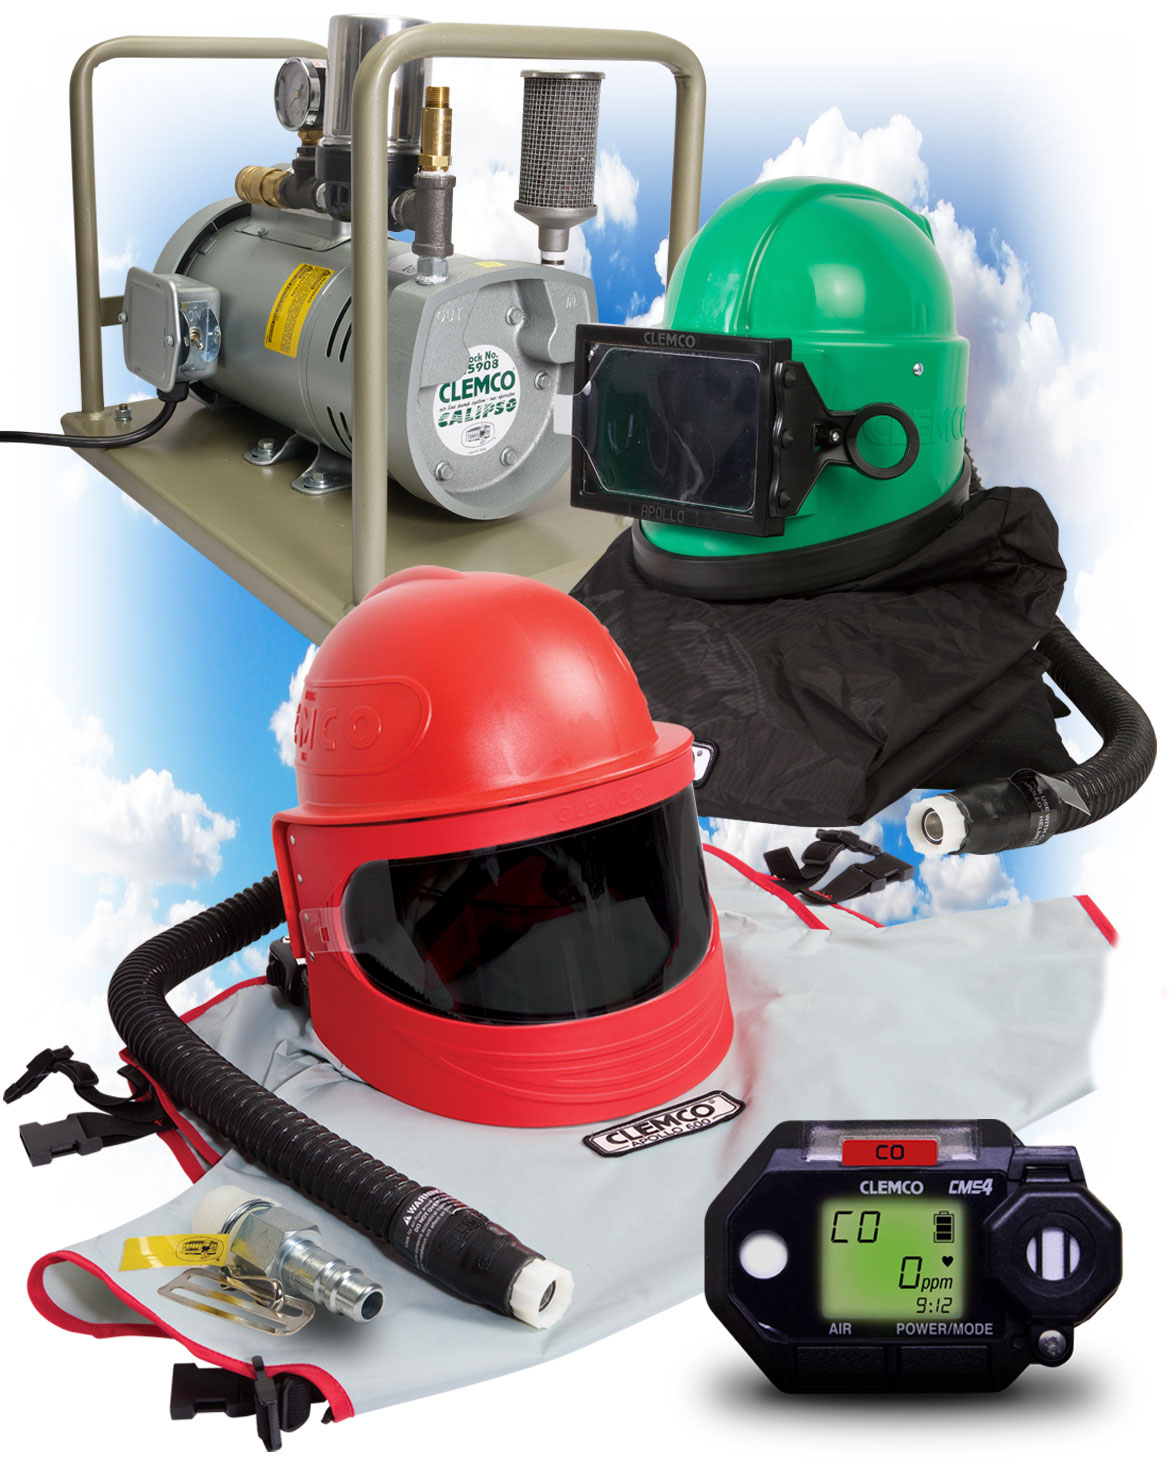 Apollo High-Pressure Respirator Systems, Safety Equipment, PPE, Respirators